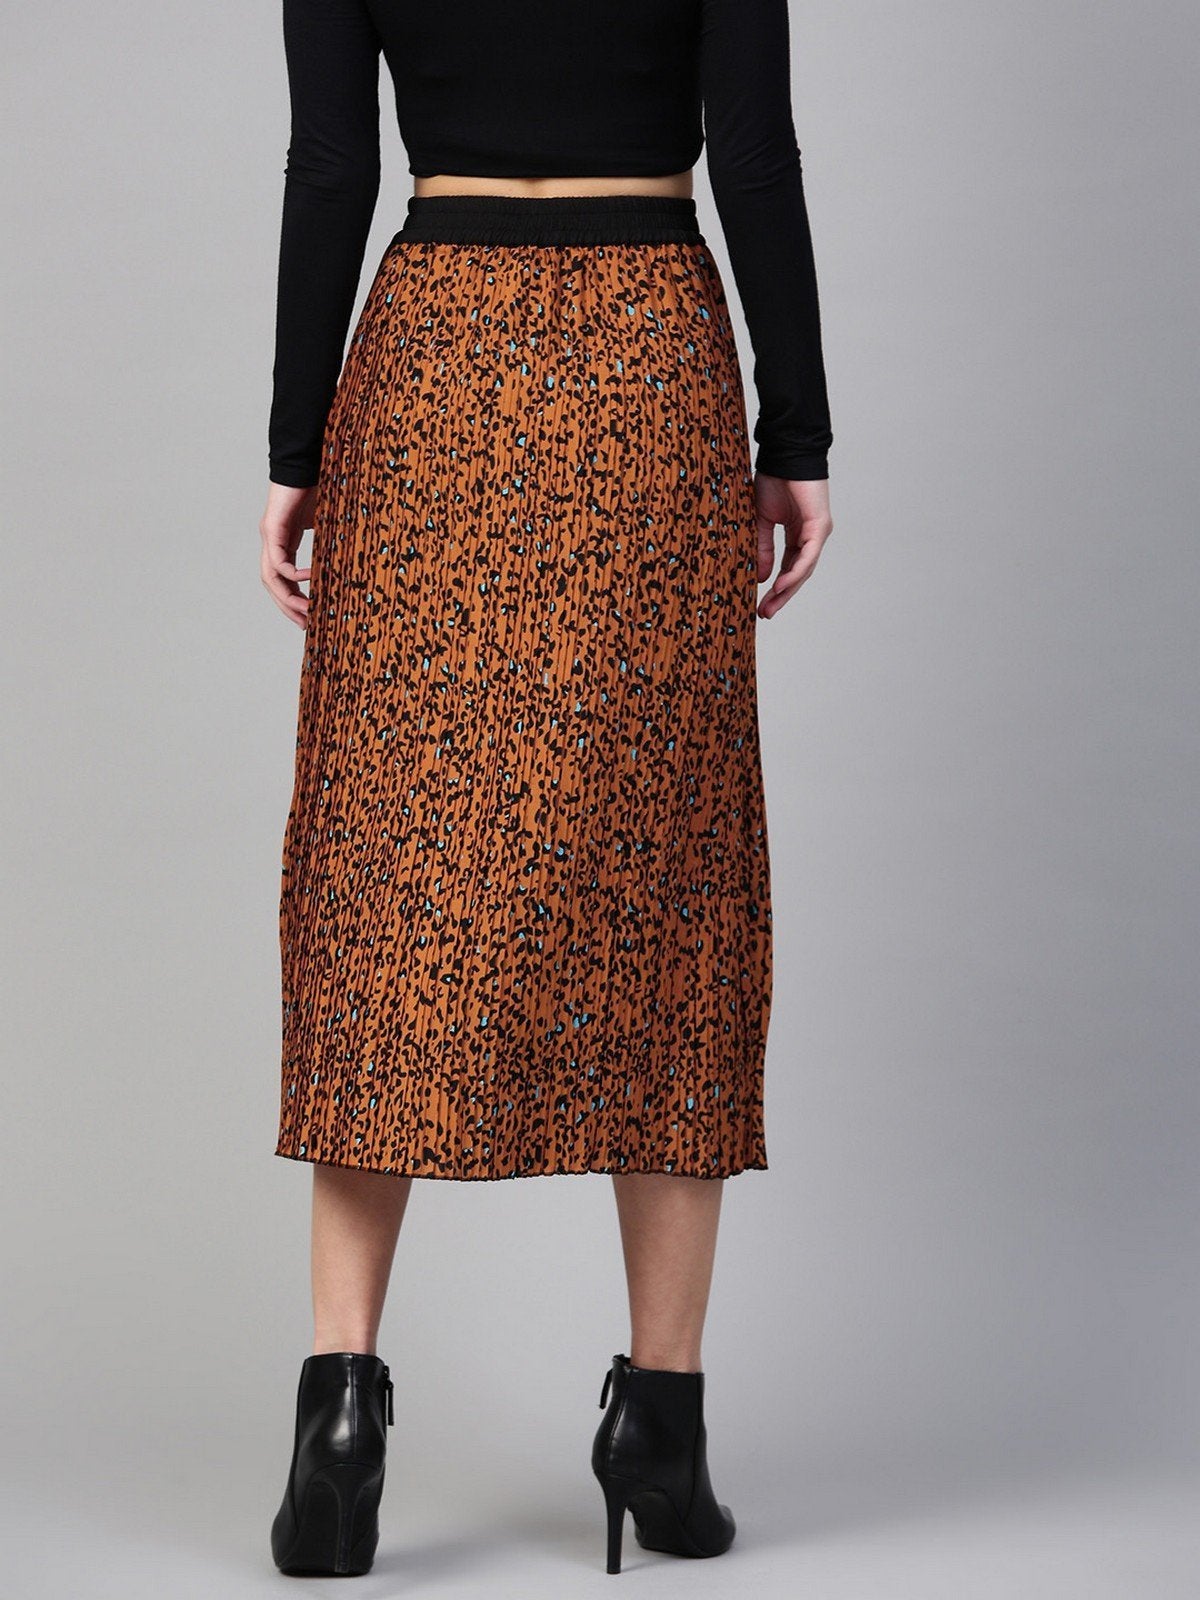 Women's Animal Printed Pleated Skirt - Pannkh